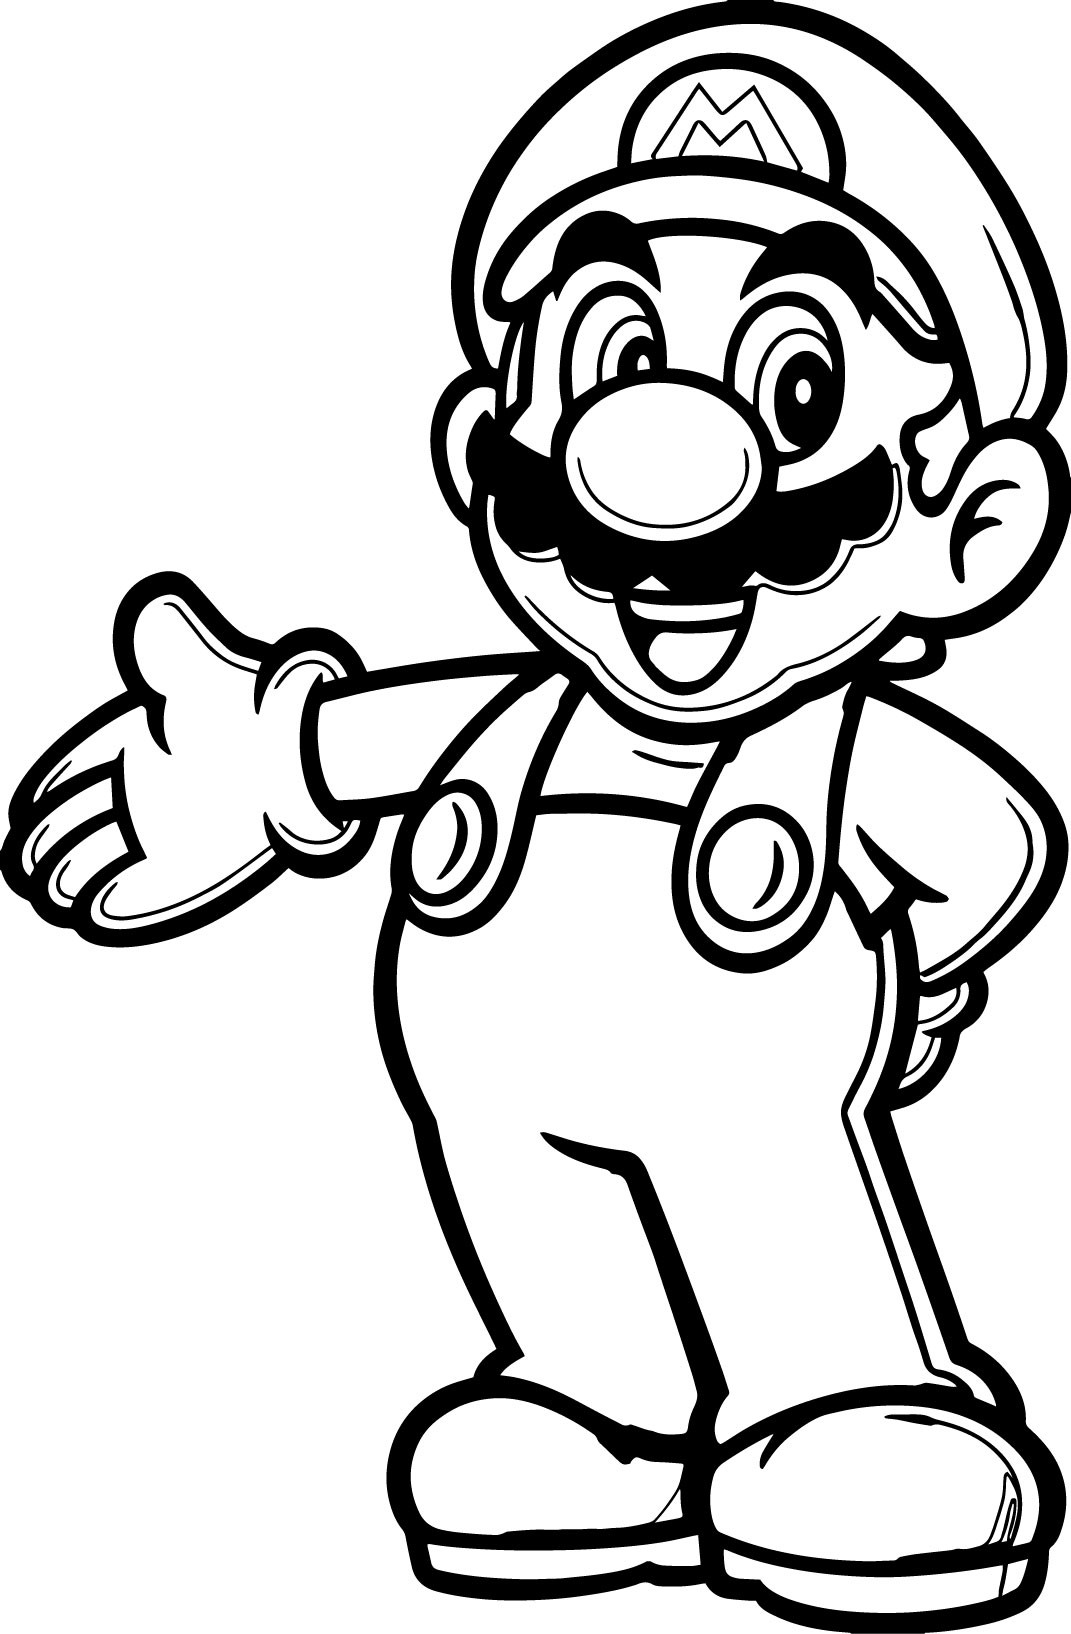 Super Coloring Pages
 Super Mario Bros Coloring Pages coloringsuite